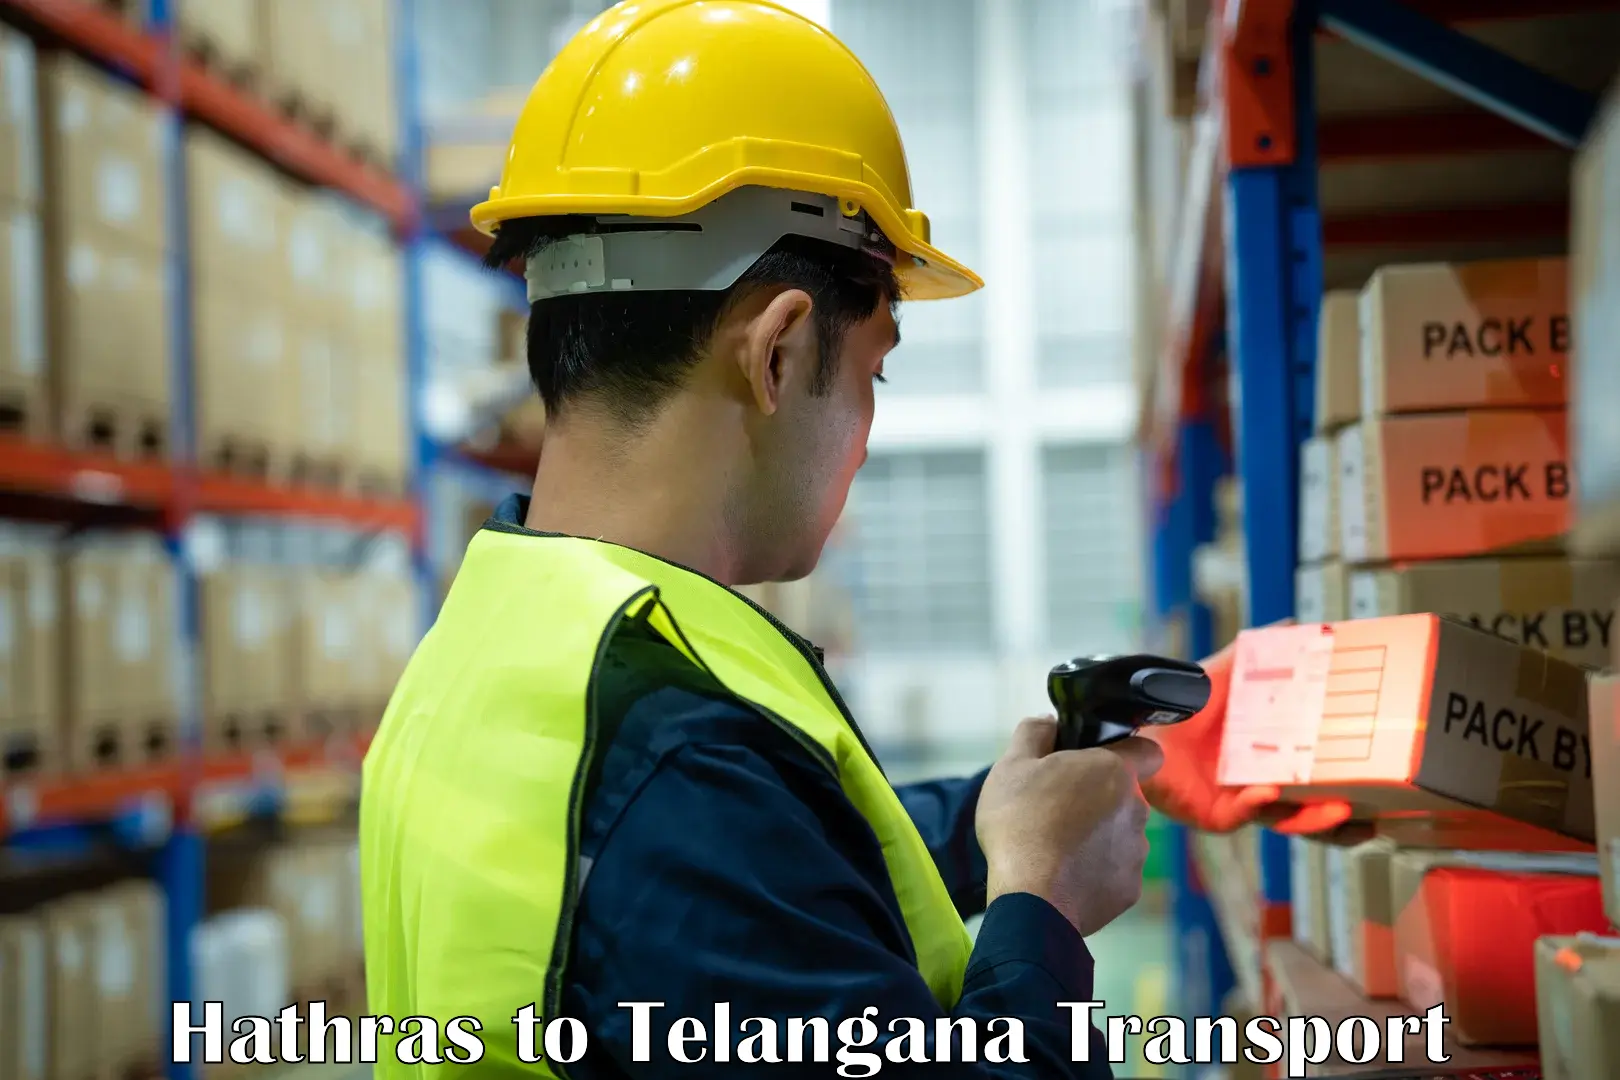 Daily transport service Hathras to Telangana